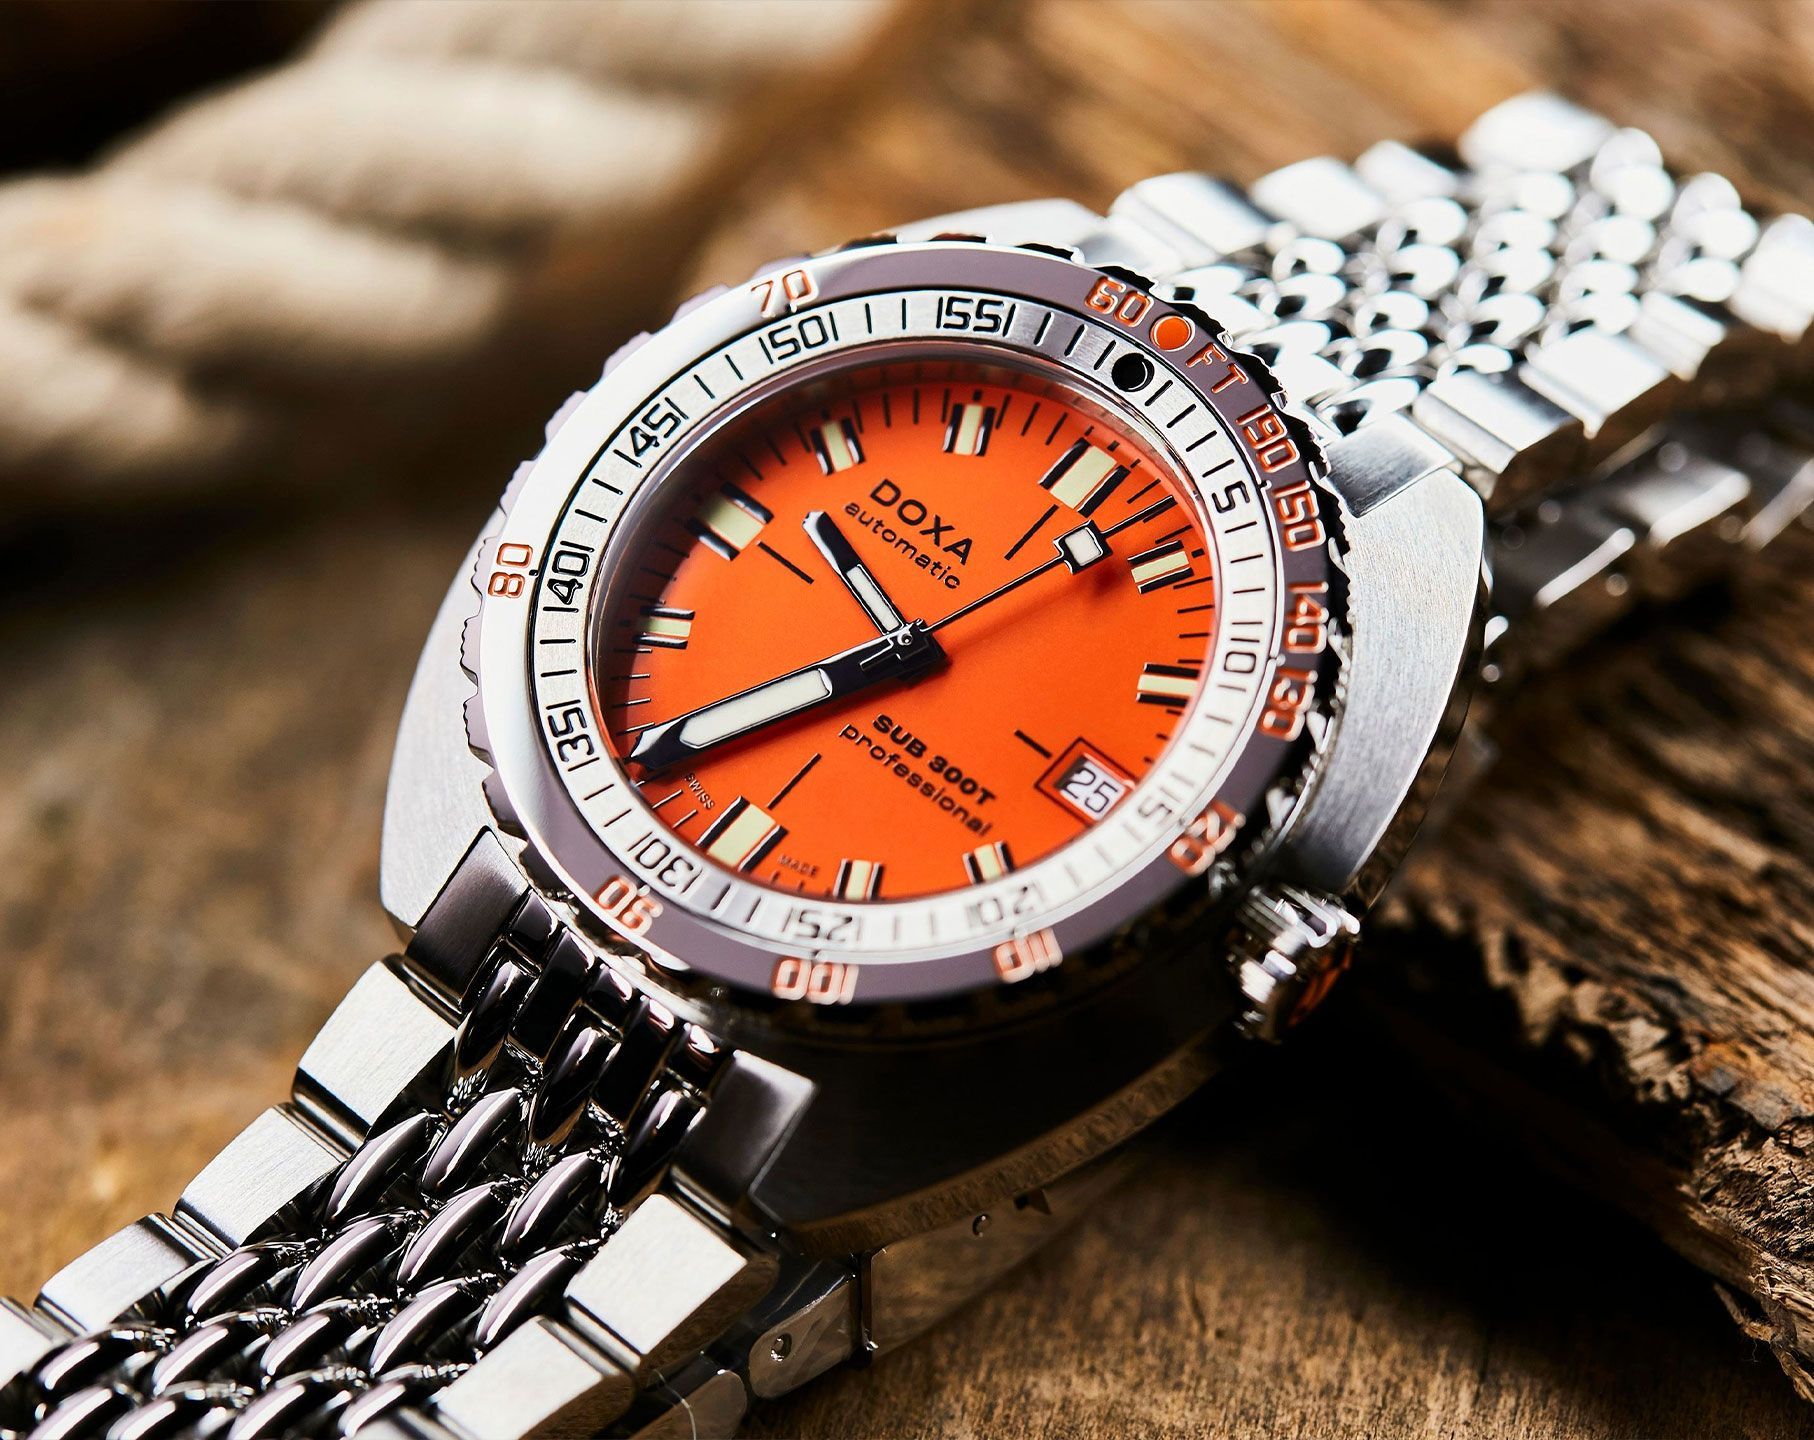 Doxa Professional 42.5 mm Watch in Orange Dial For Men - 8